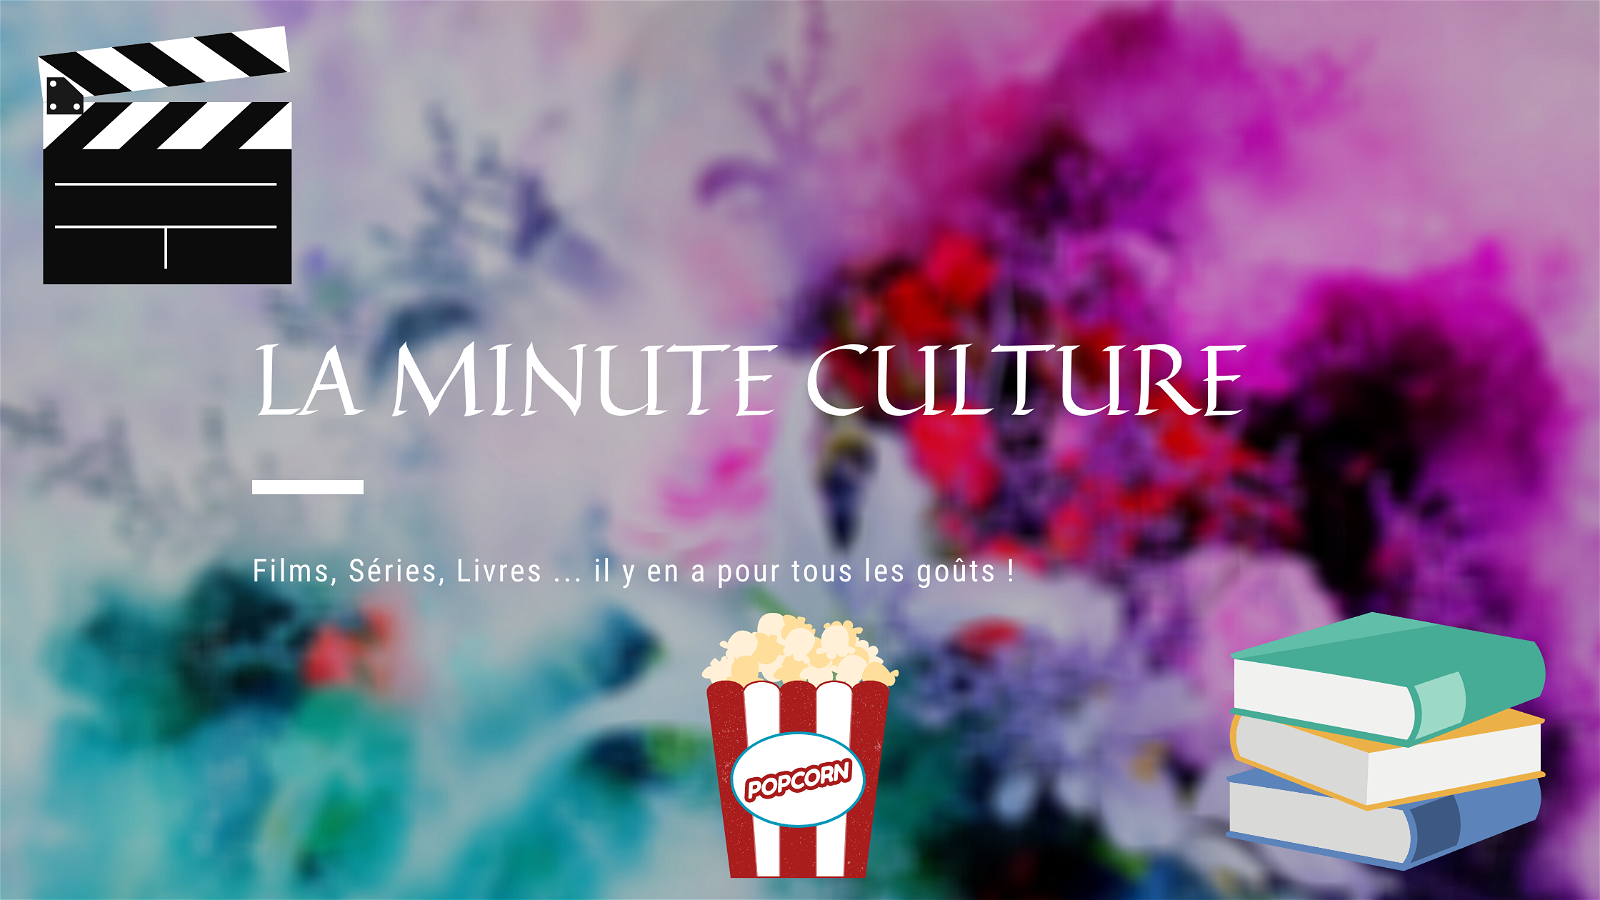 La minute culture - épisode 6